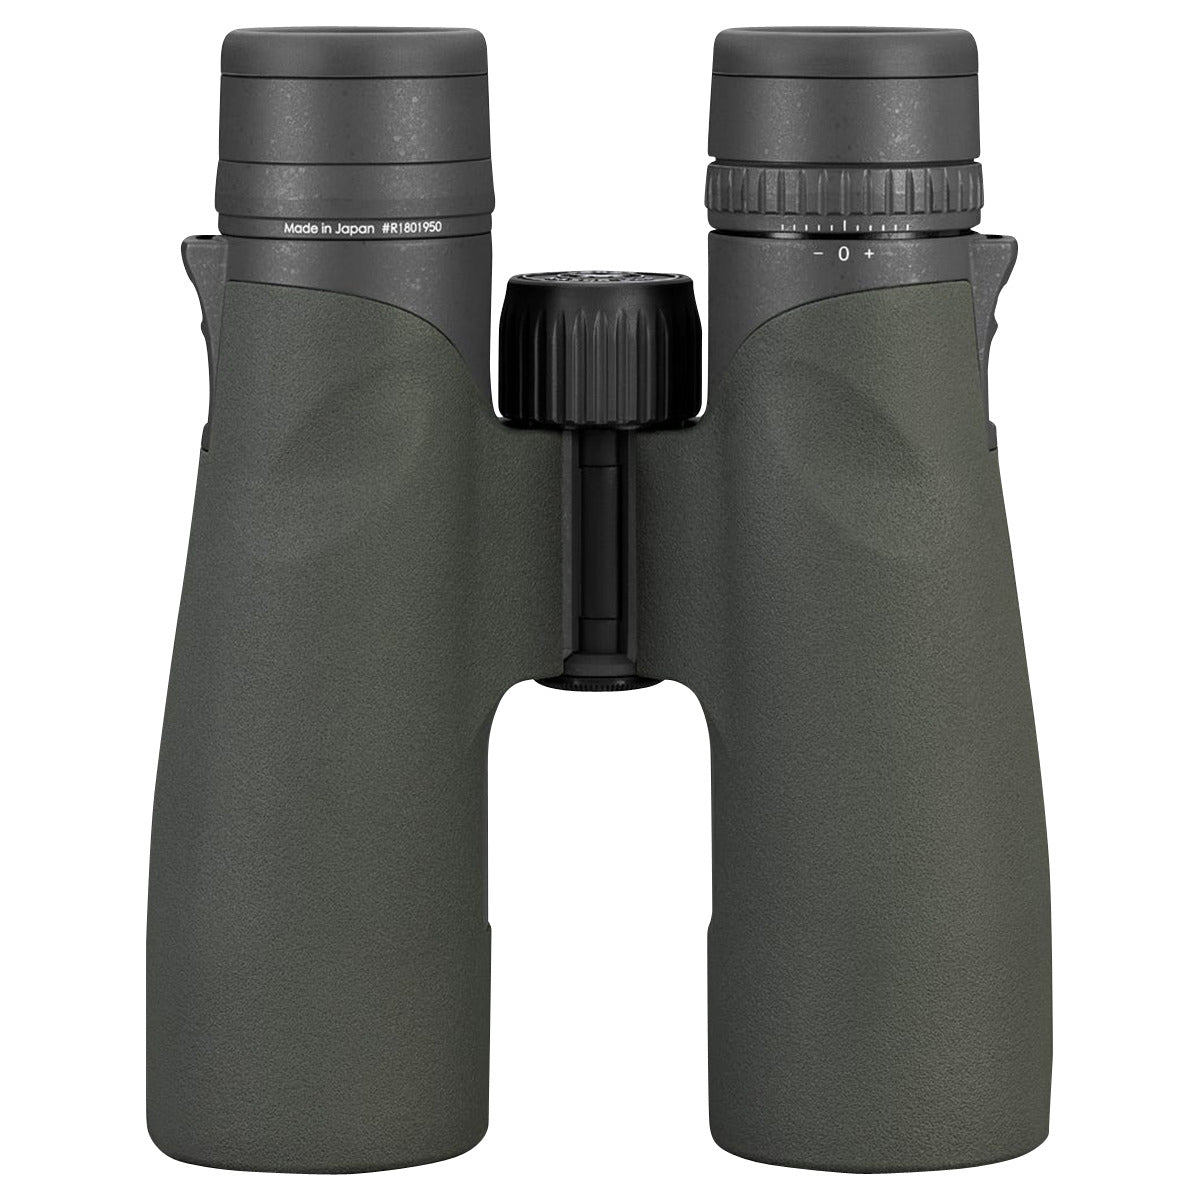 Vortex Razor UHD 8x42 Binoculars by Vortex Optics | Optics - goHUNT Shop